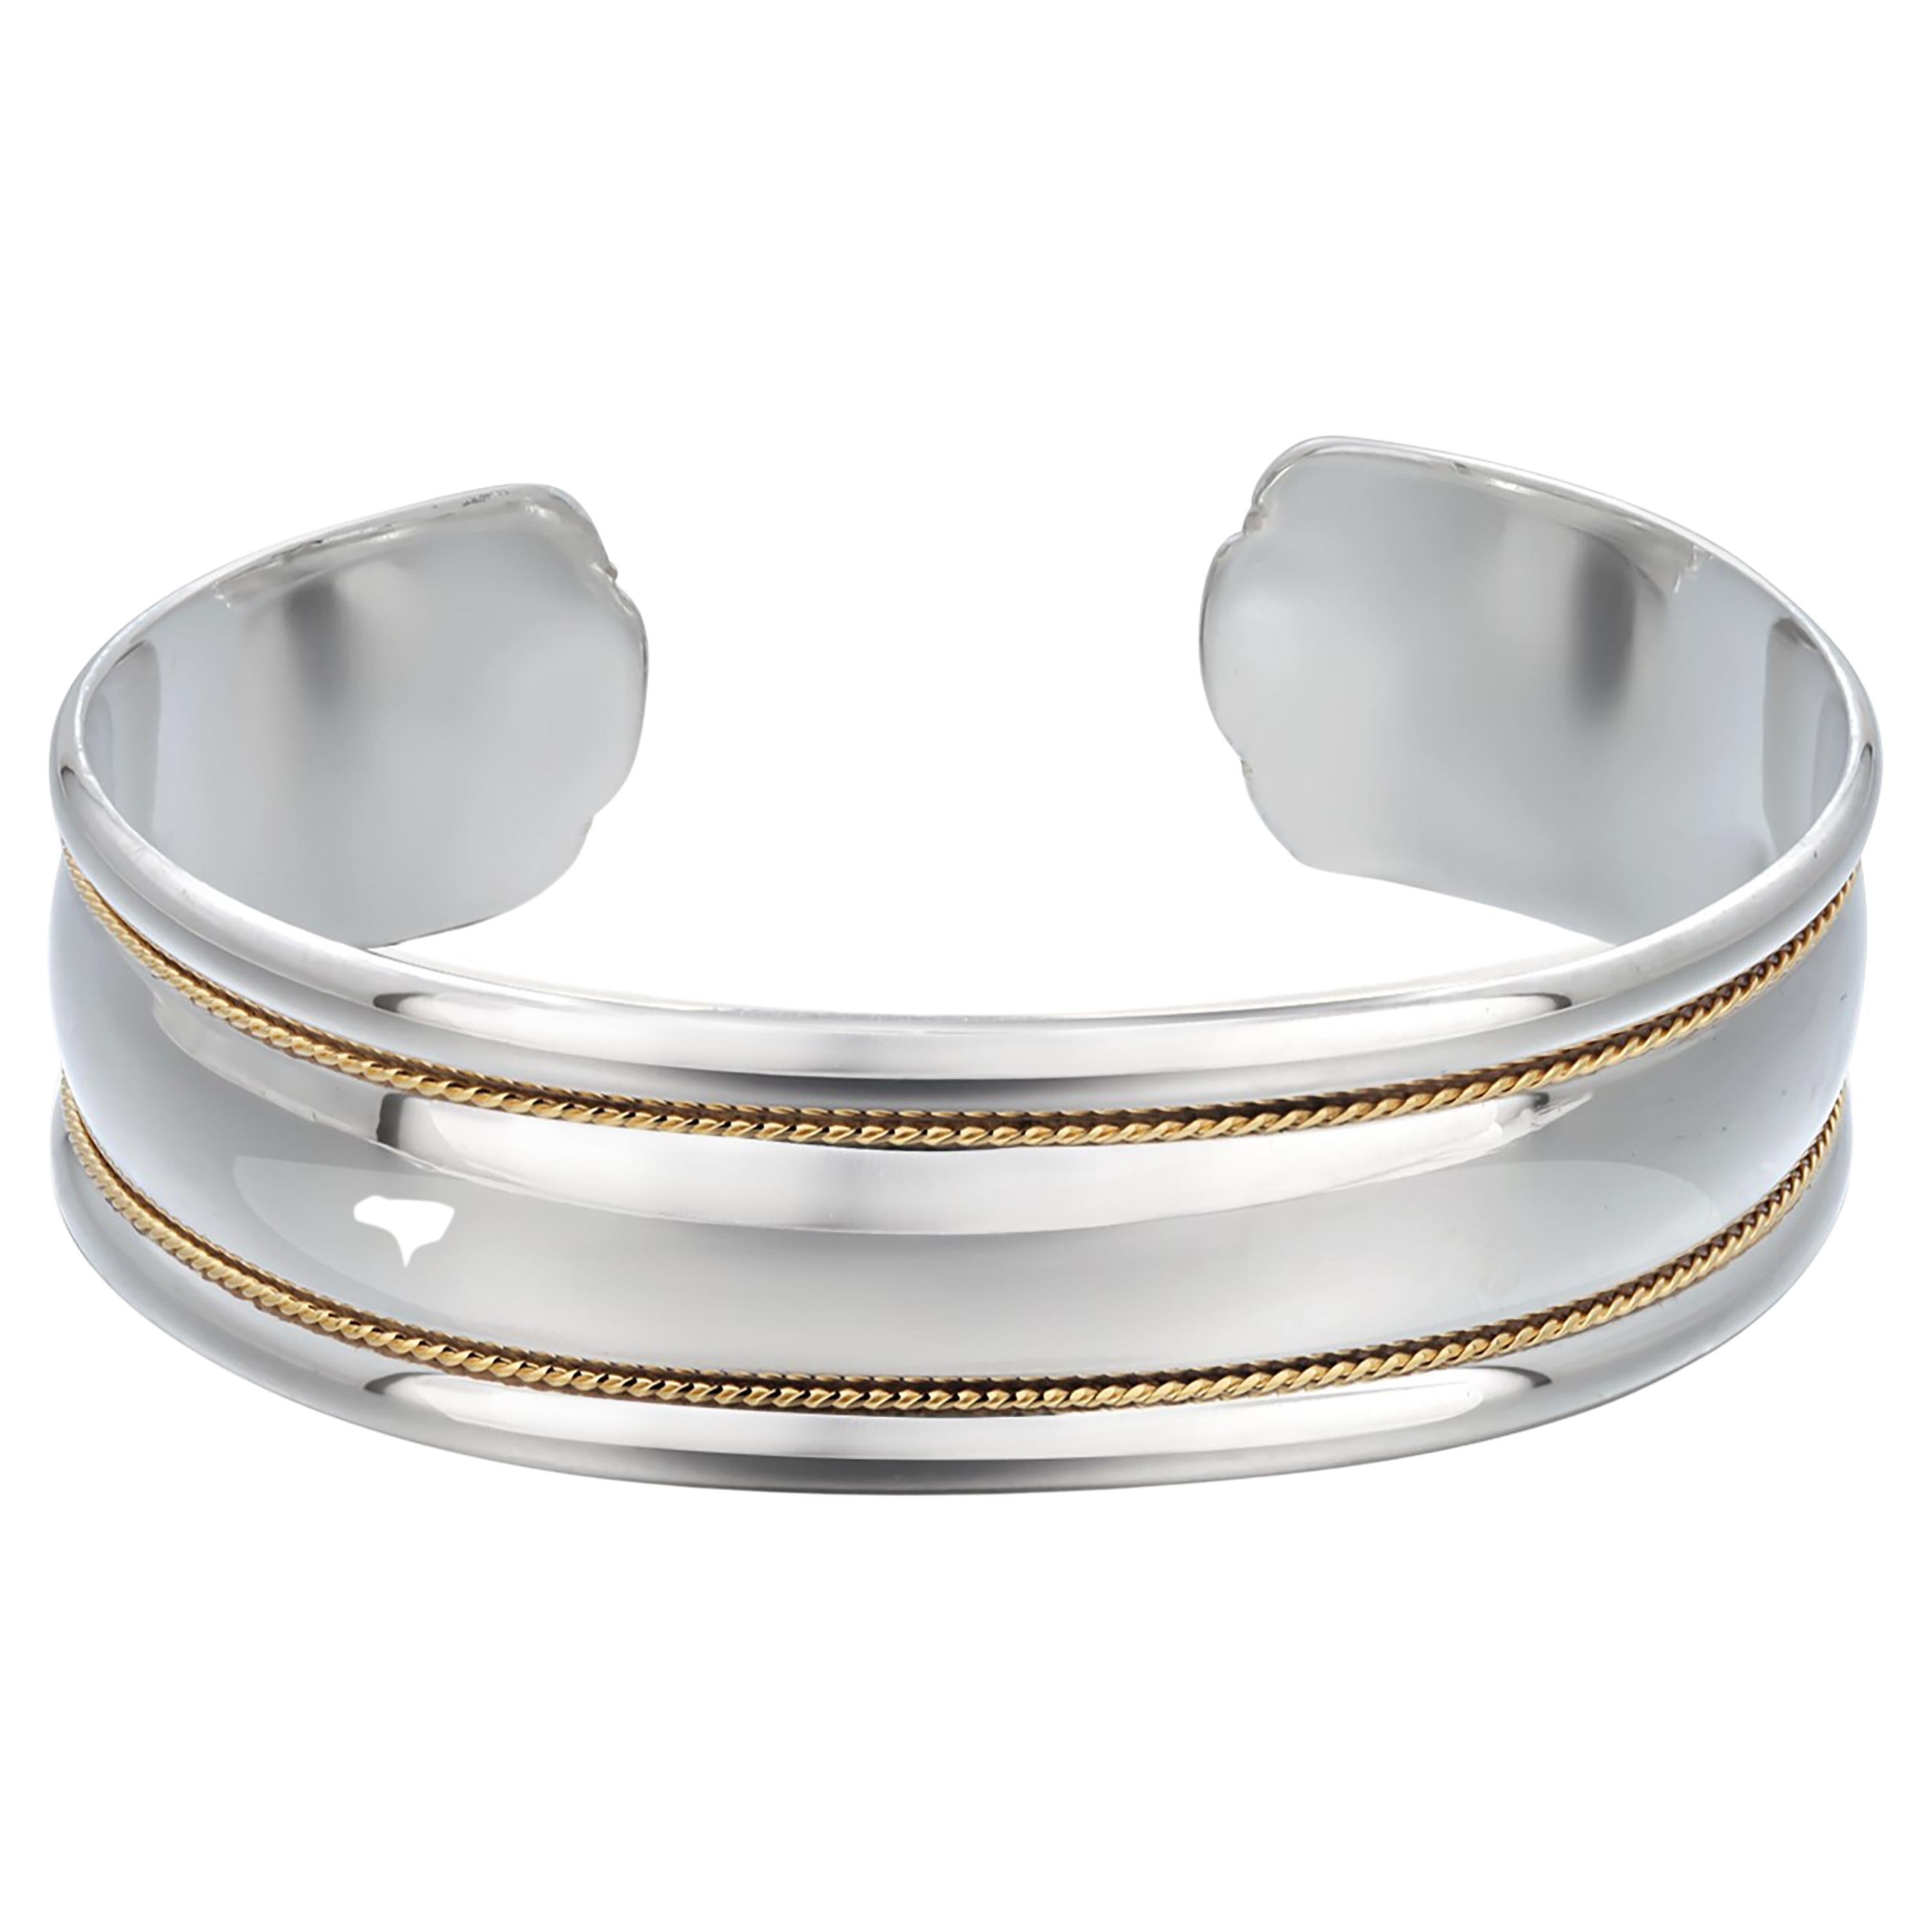 Tiffany & Co. - Tiffany Co 21st Century 18 Karat Sterling 6.5 inch Wide Cuff Bracelet American Contemporary Gold